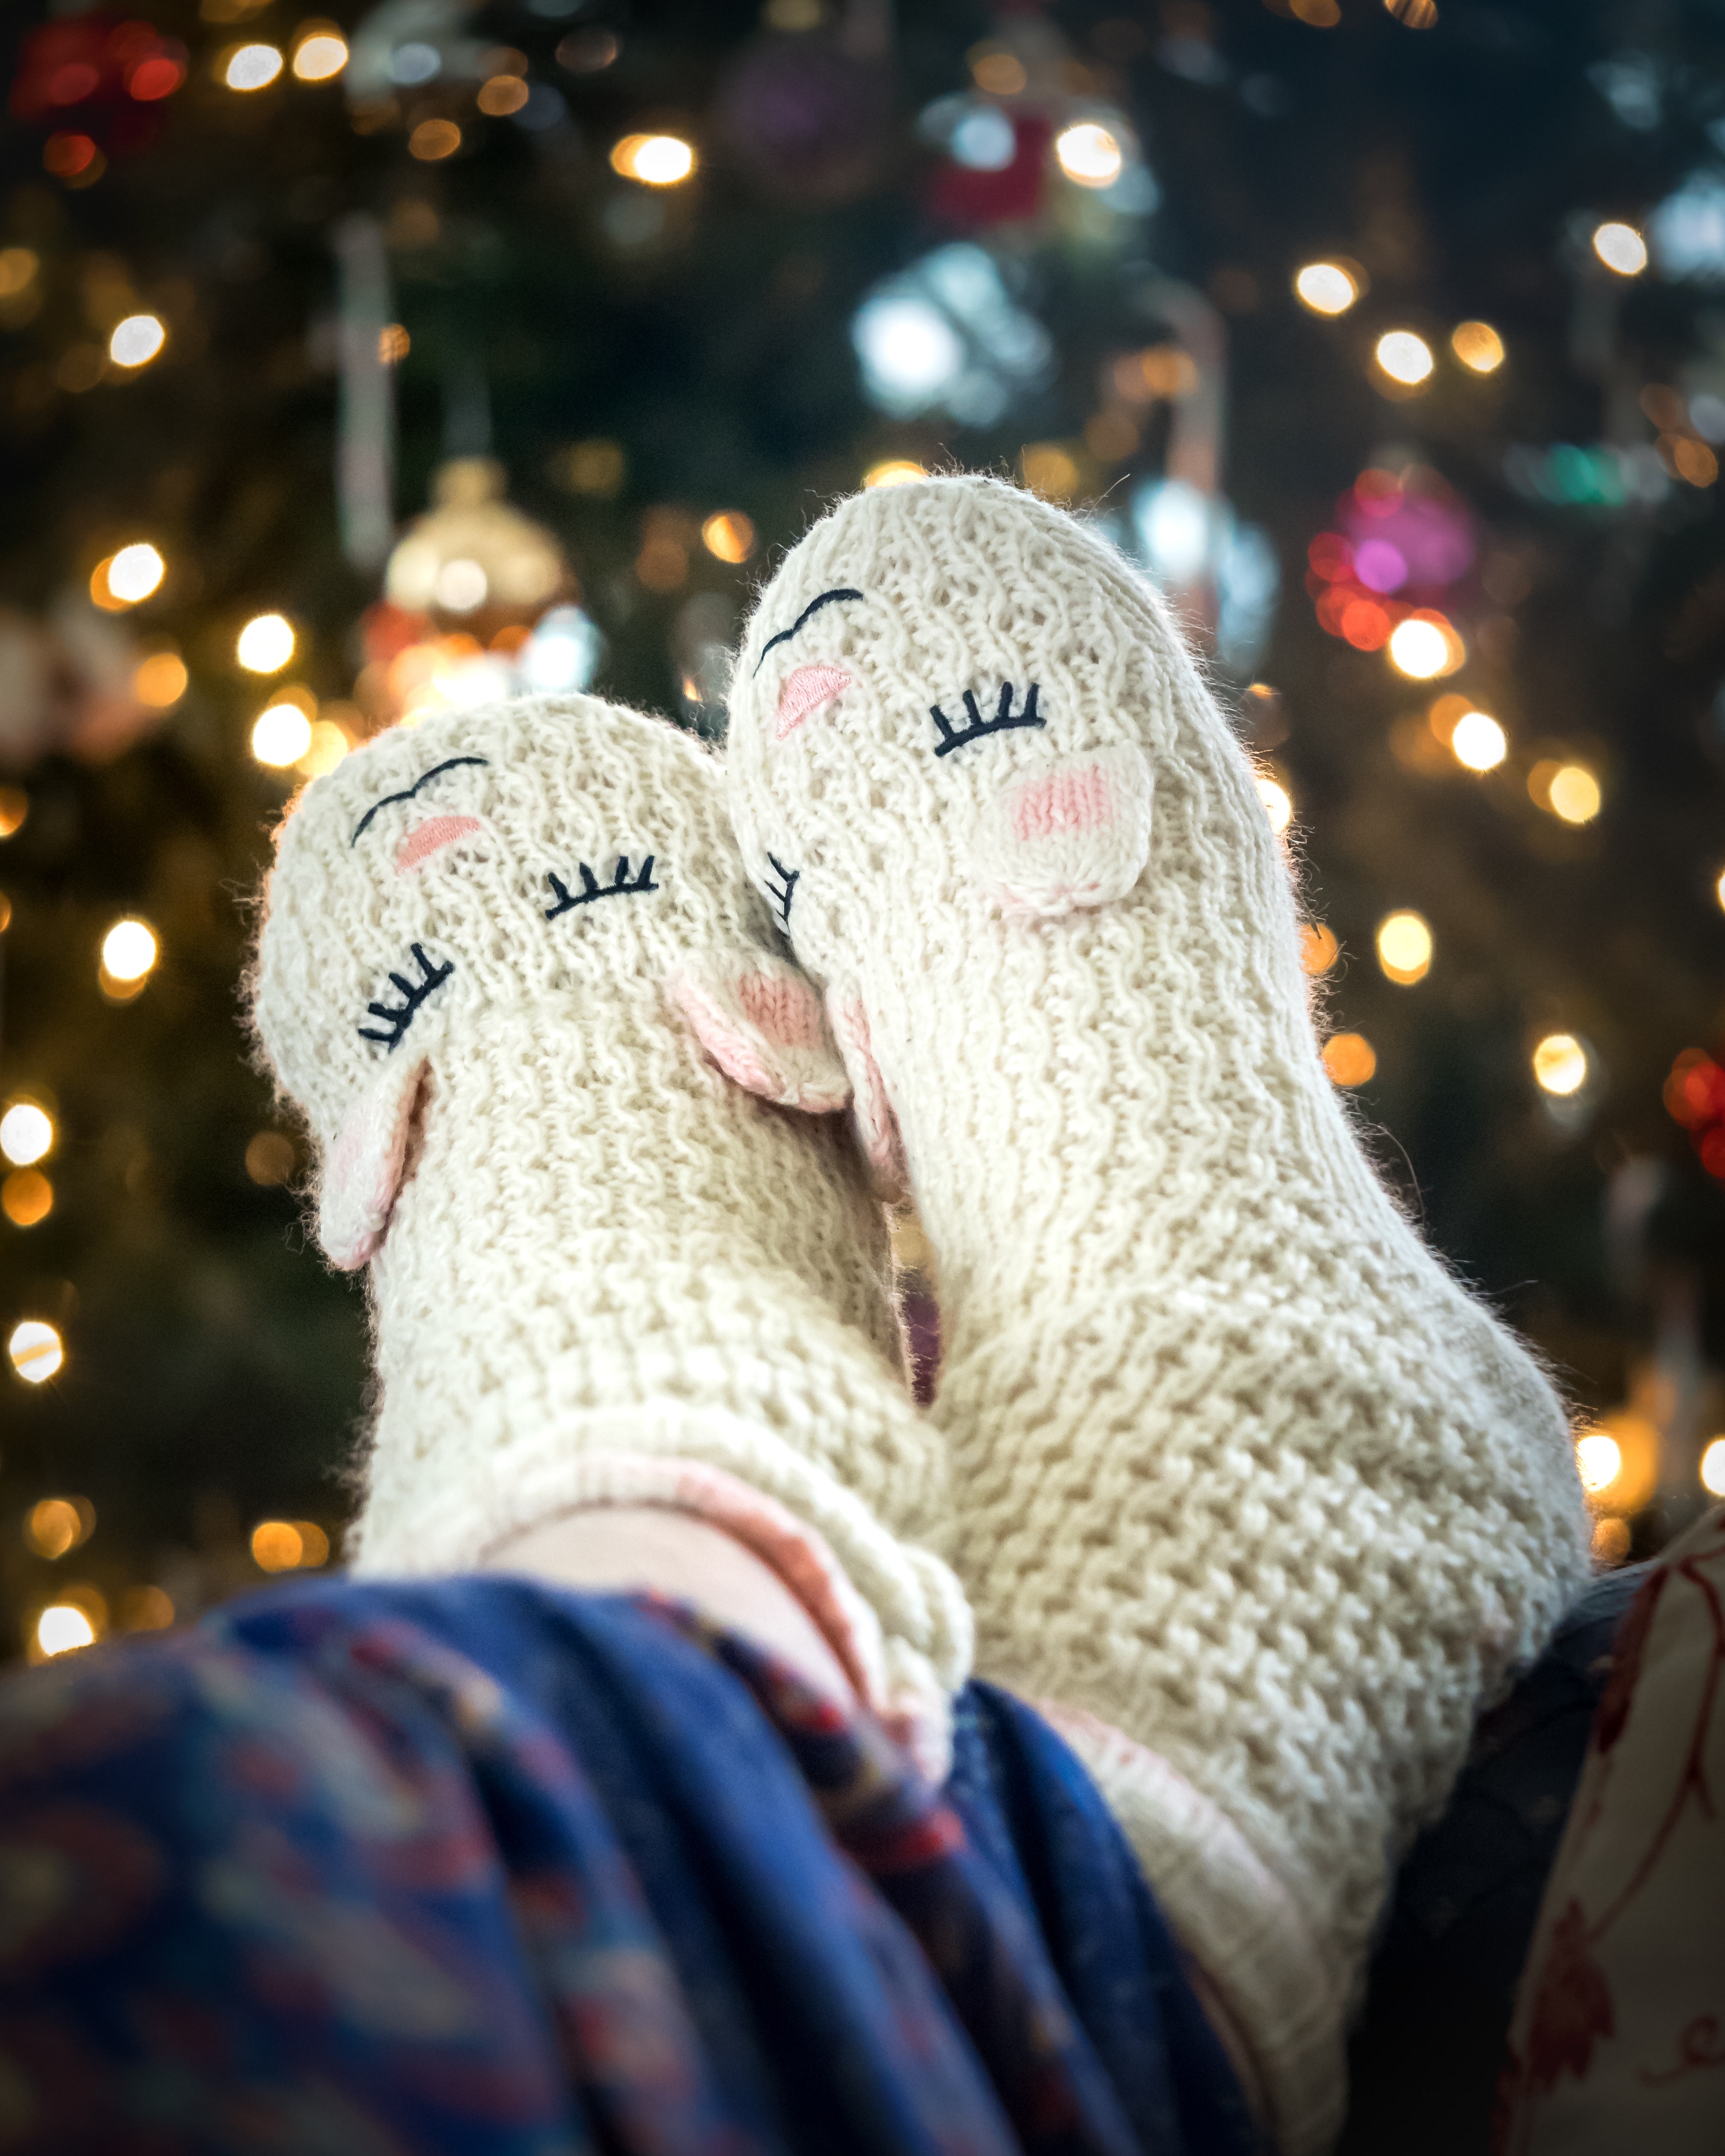 Spotlight on the Warming Socks Treatment